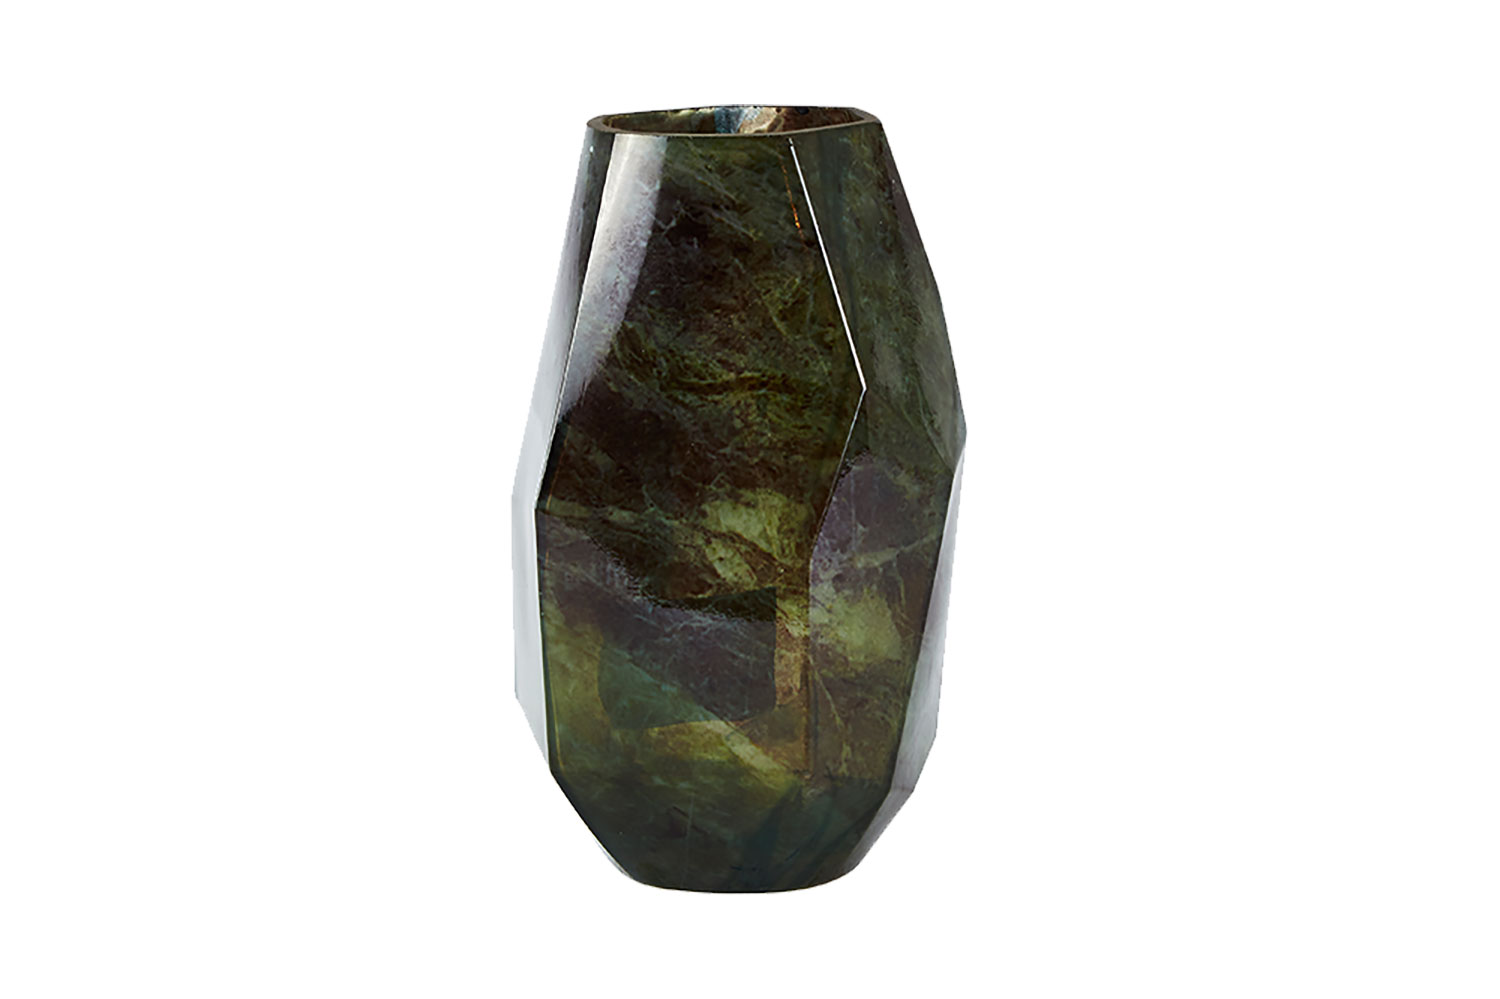 Beveled glass vase